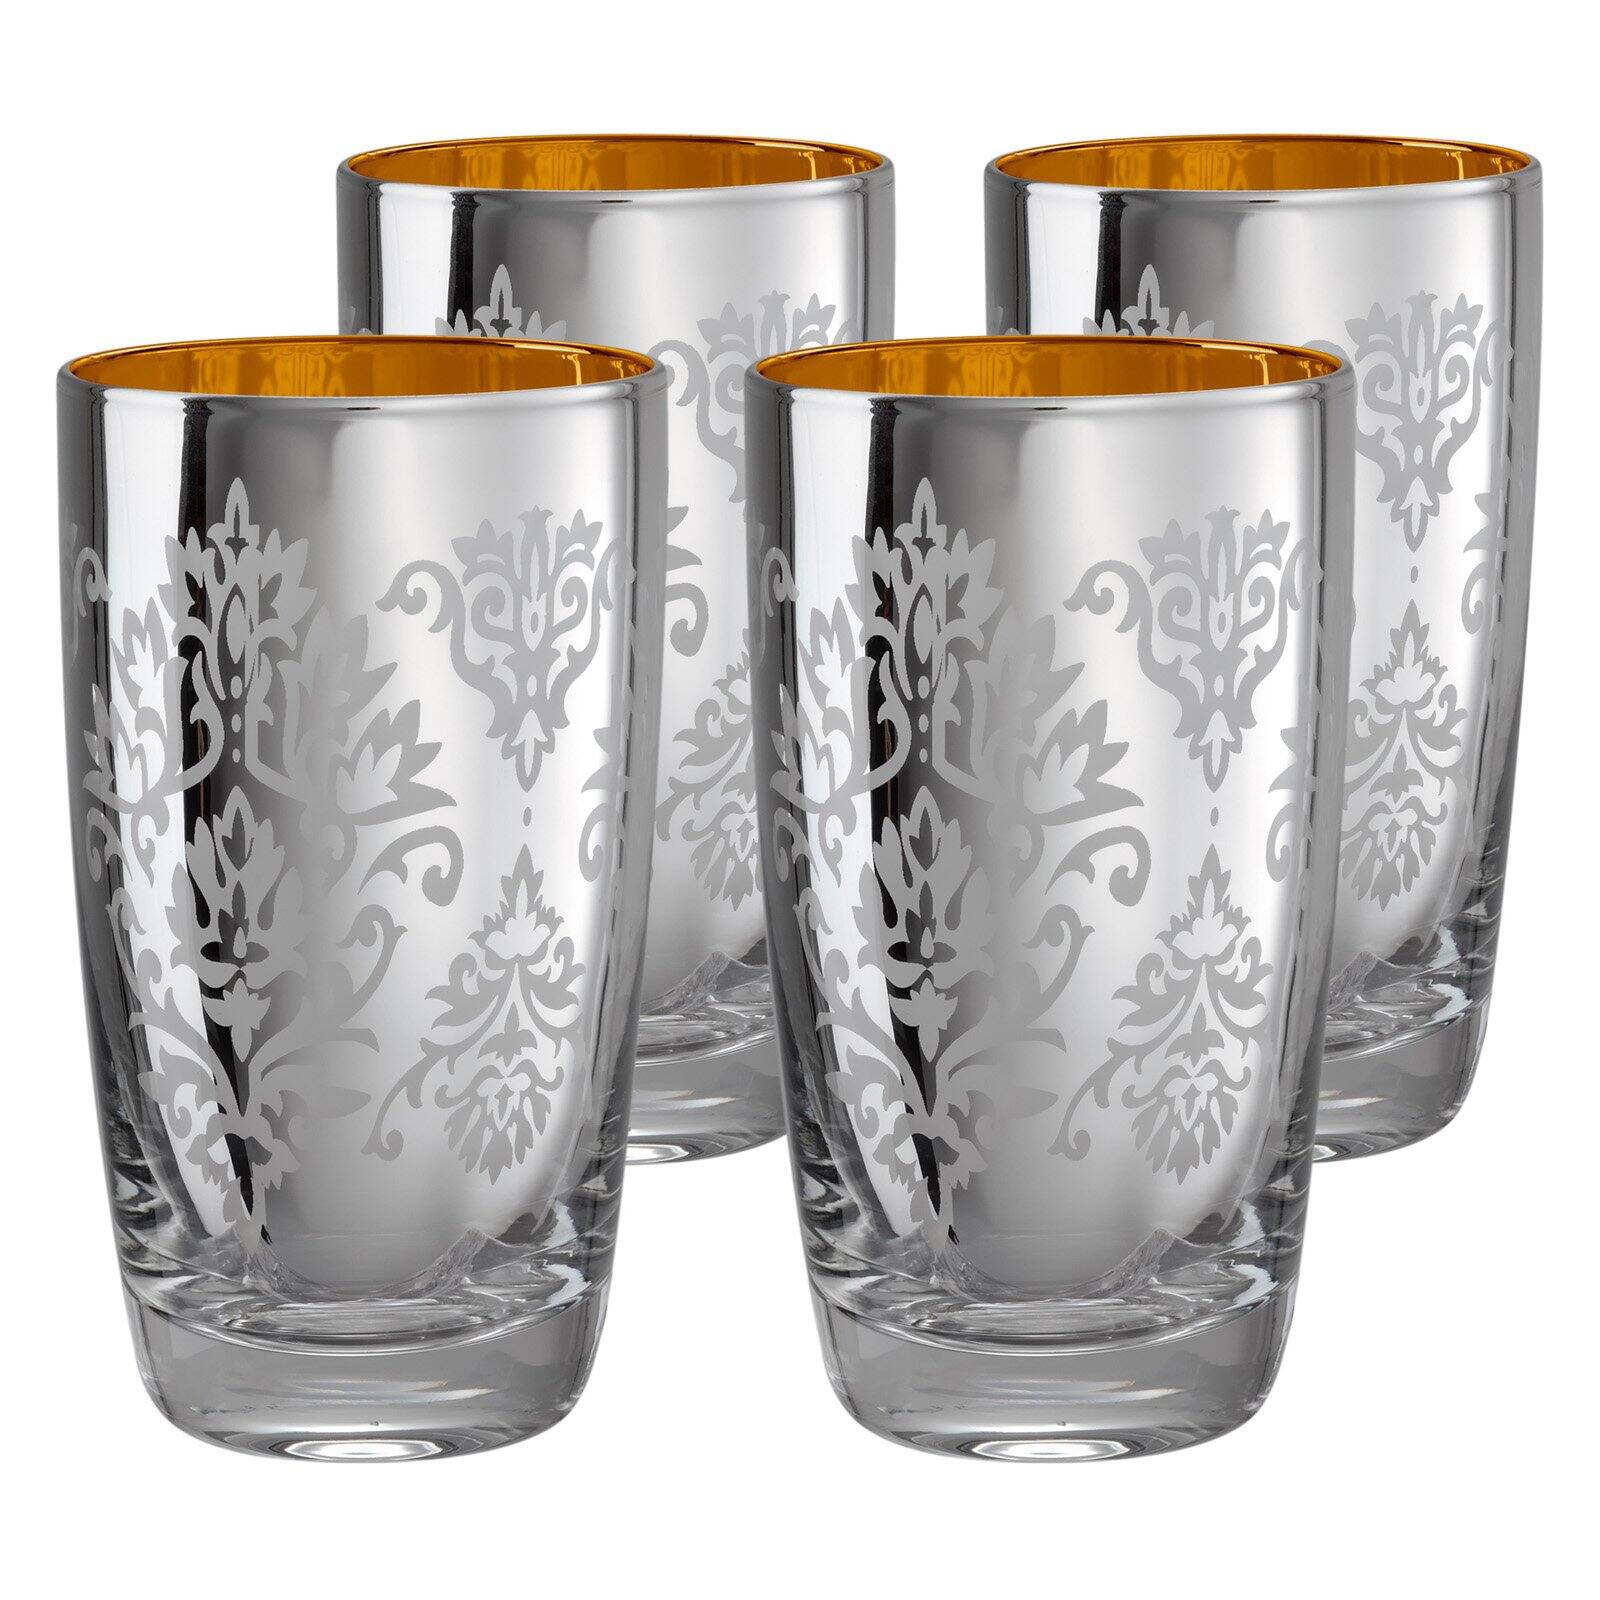 Artland Inc. Silver Brocade HiBall Glasses - Set of 4 - image 2 of 2